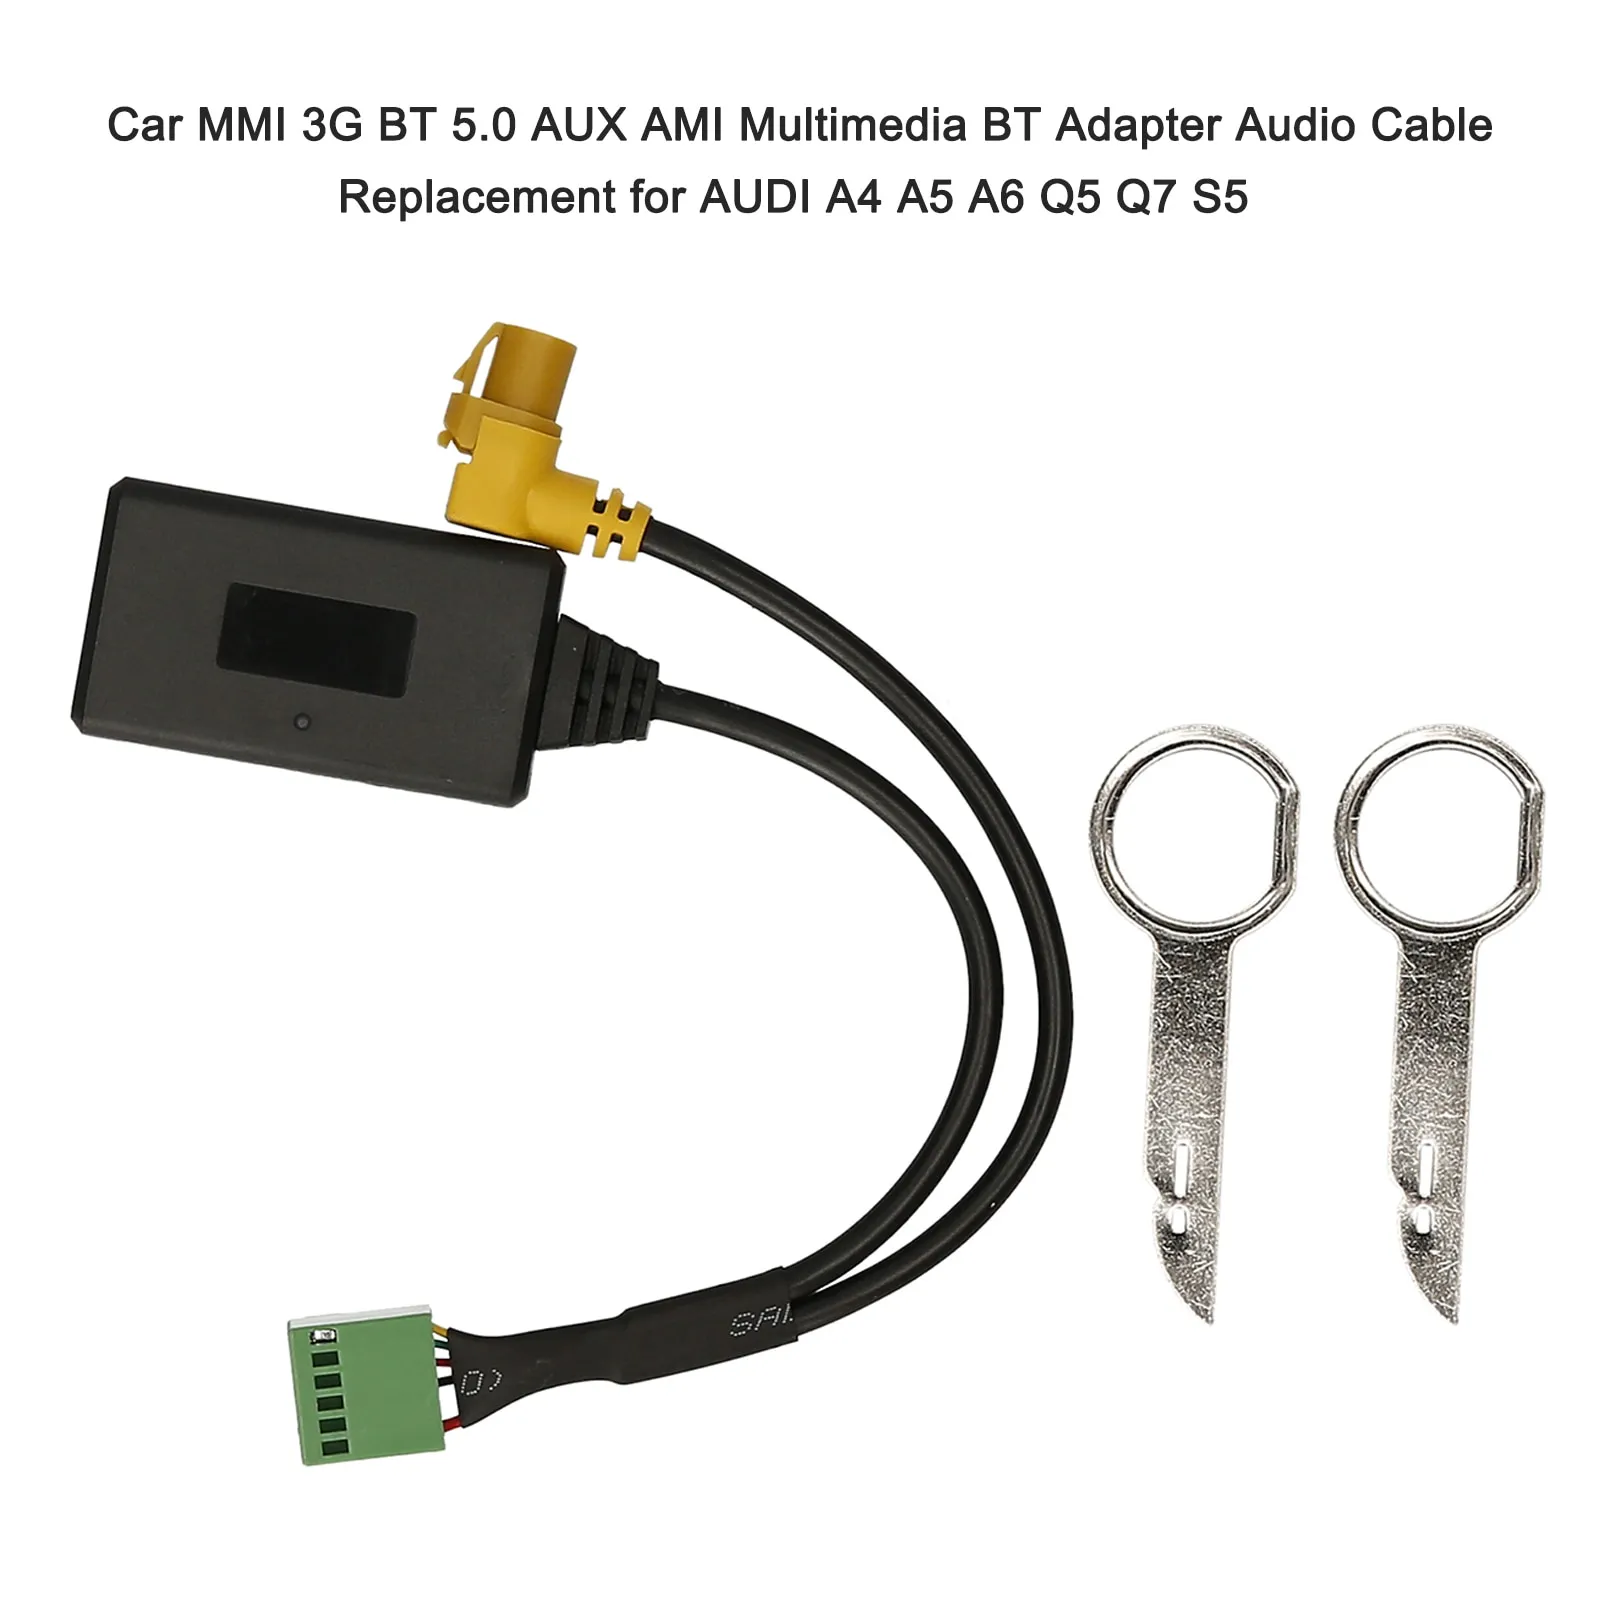 Auto MMI 3G BT 5.0 AUX AMI Multimedia BT Adattatore Cavo Audio di Ricambio per A4 A5 A6 Q5 Q7 S5